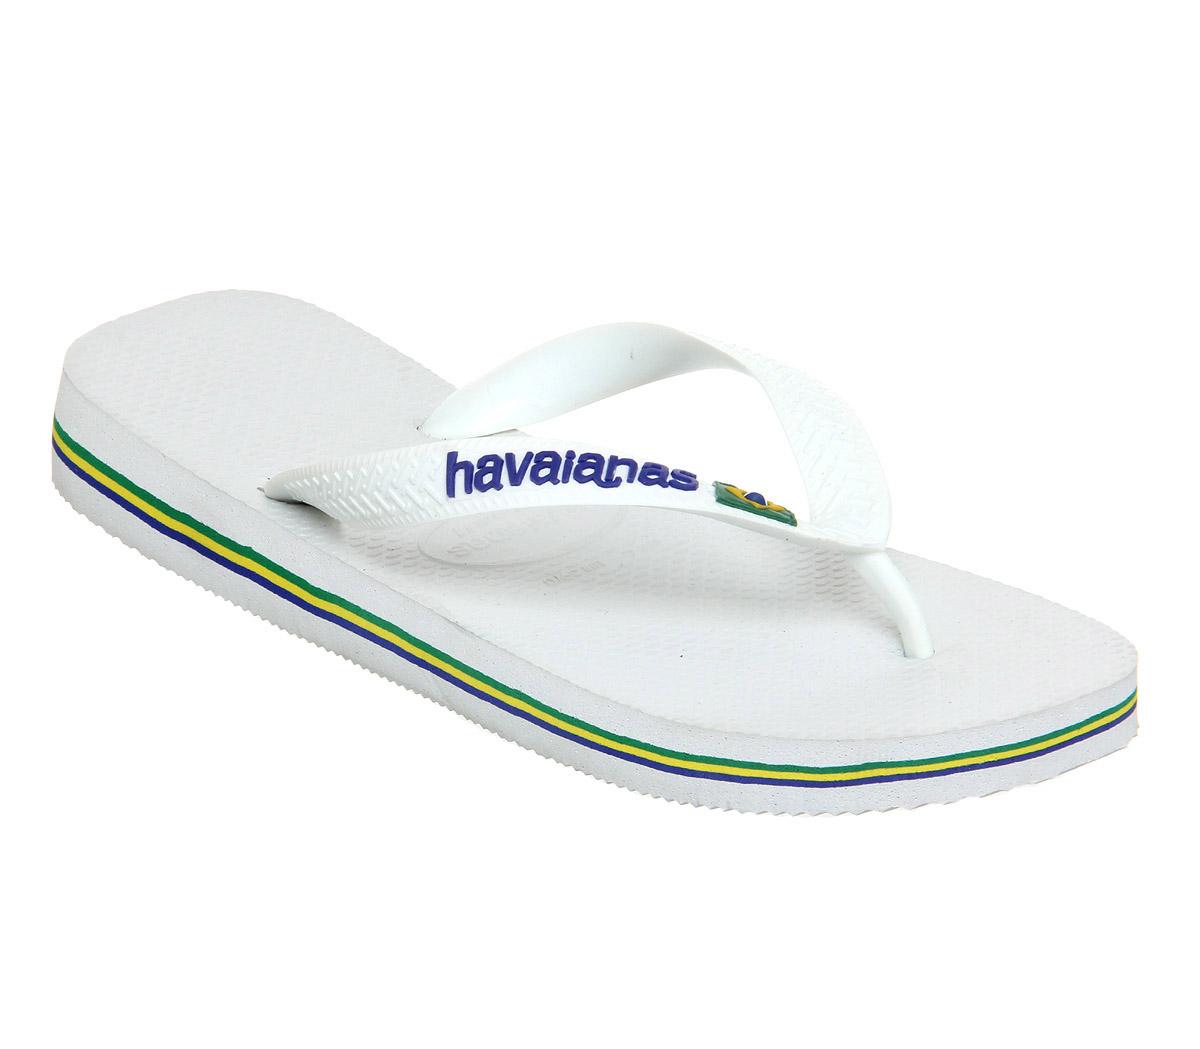 havaianas slippers sale